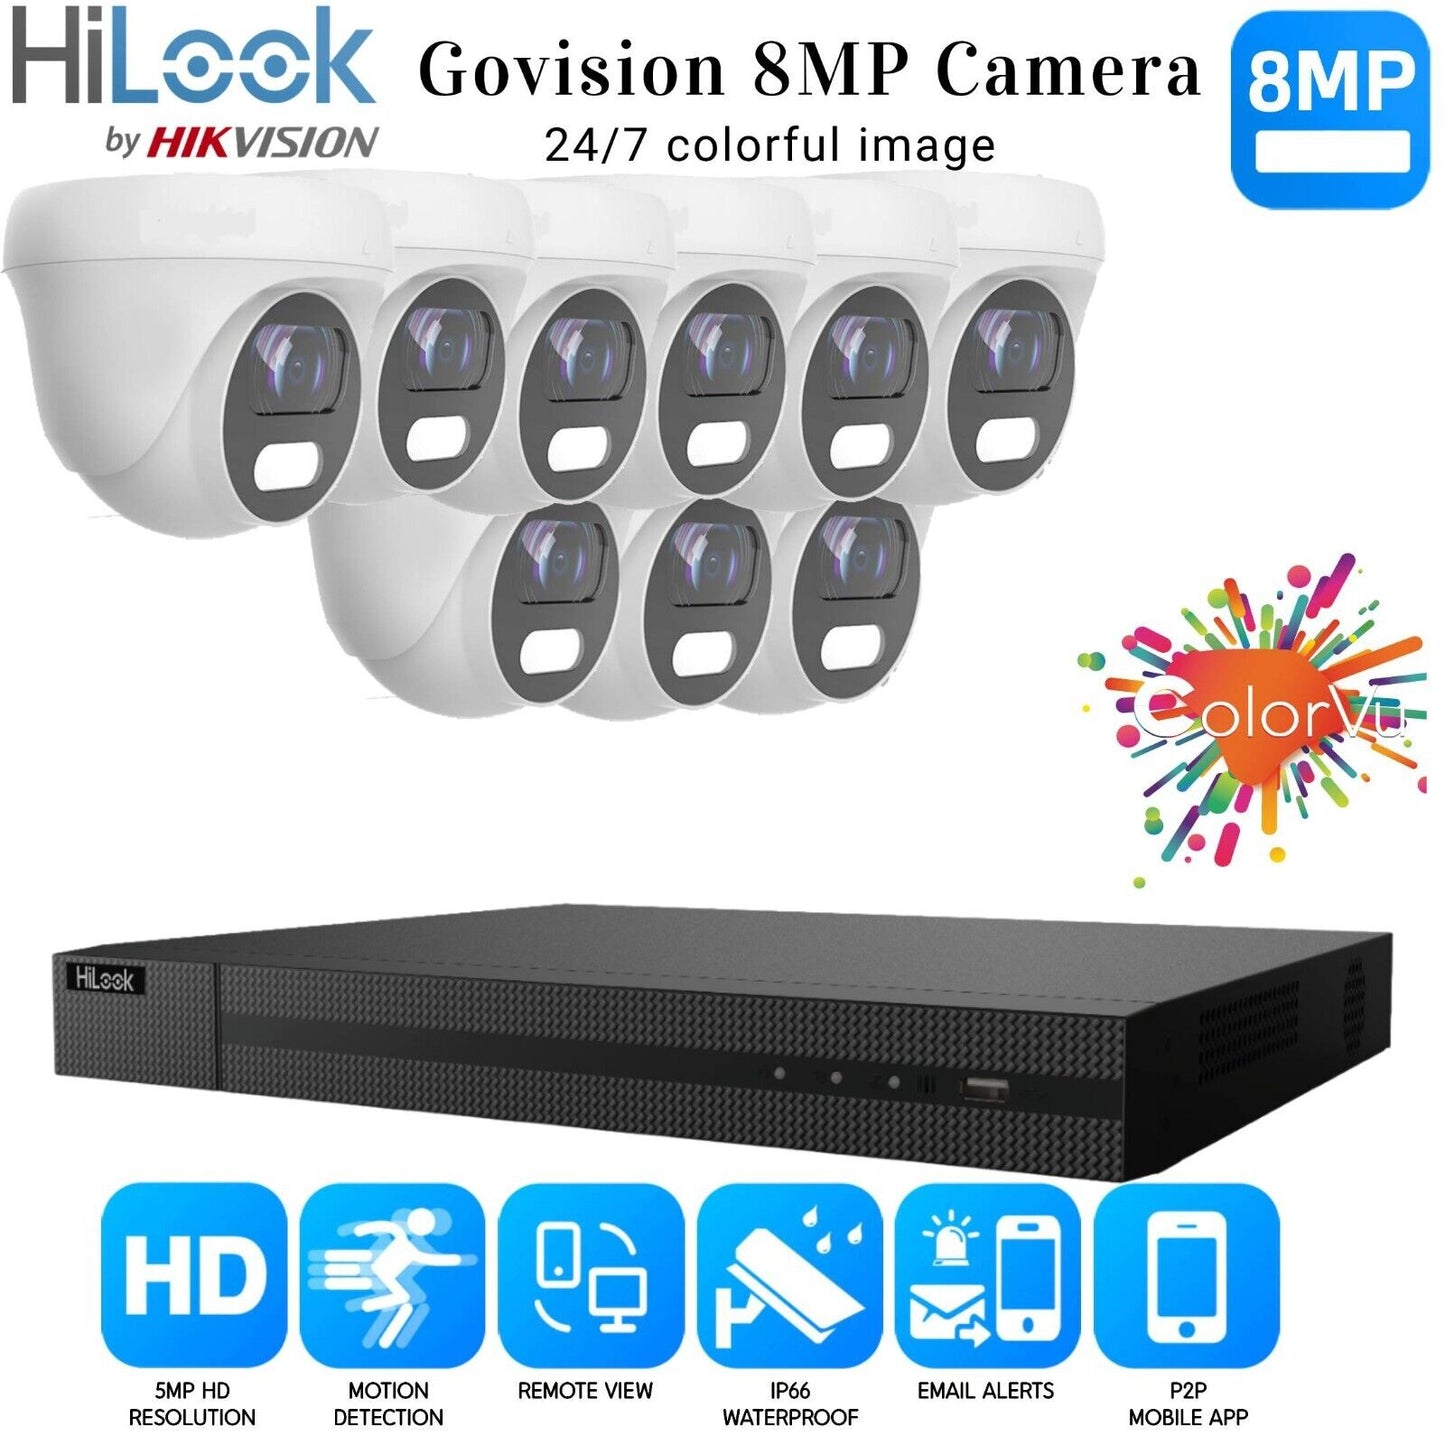 HIKVISION 8MP COLORVU CCTV SYSTEM UHD 8MP DVR 4K 24/7 COLORVu OUTDOOR CAMERA KIT 16CH DVR 9xCameras (white) 1TB HDD